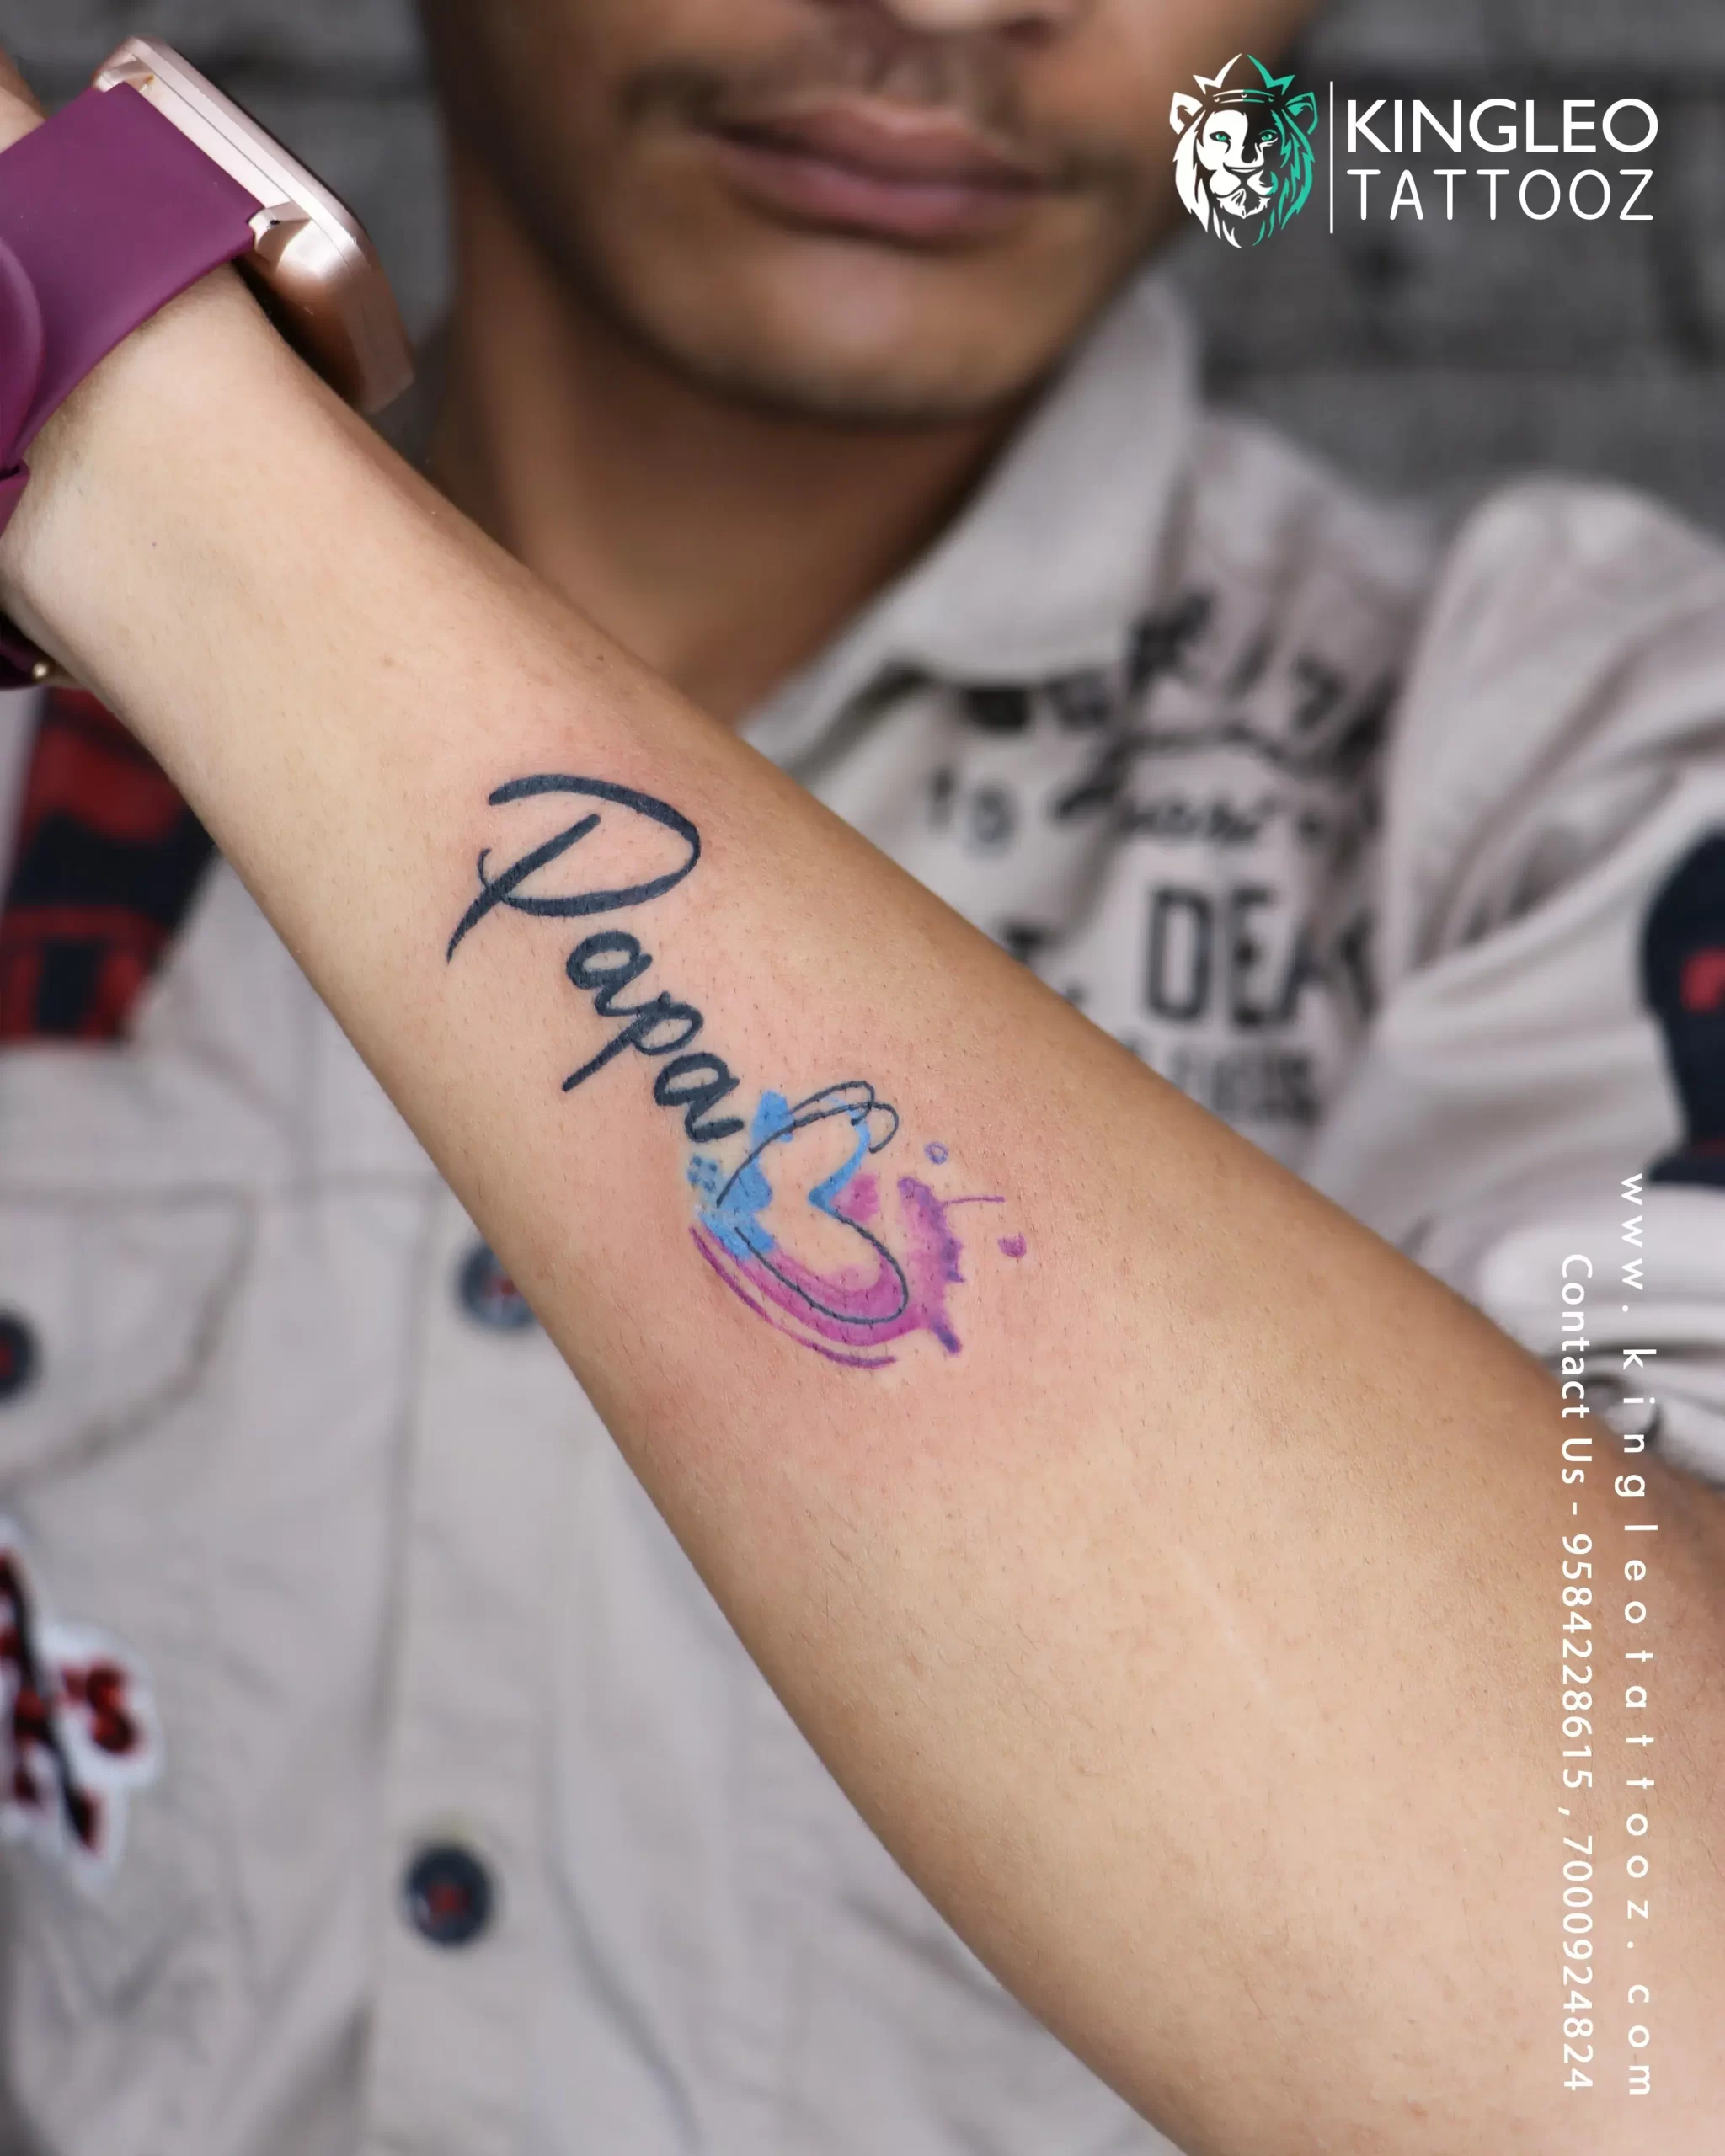 Maa Papa Tattoo design with... - Prince tattoo raipur | Facebook